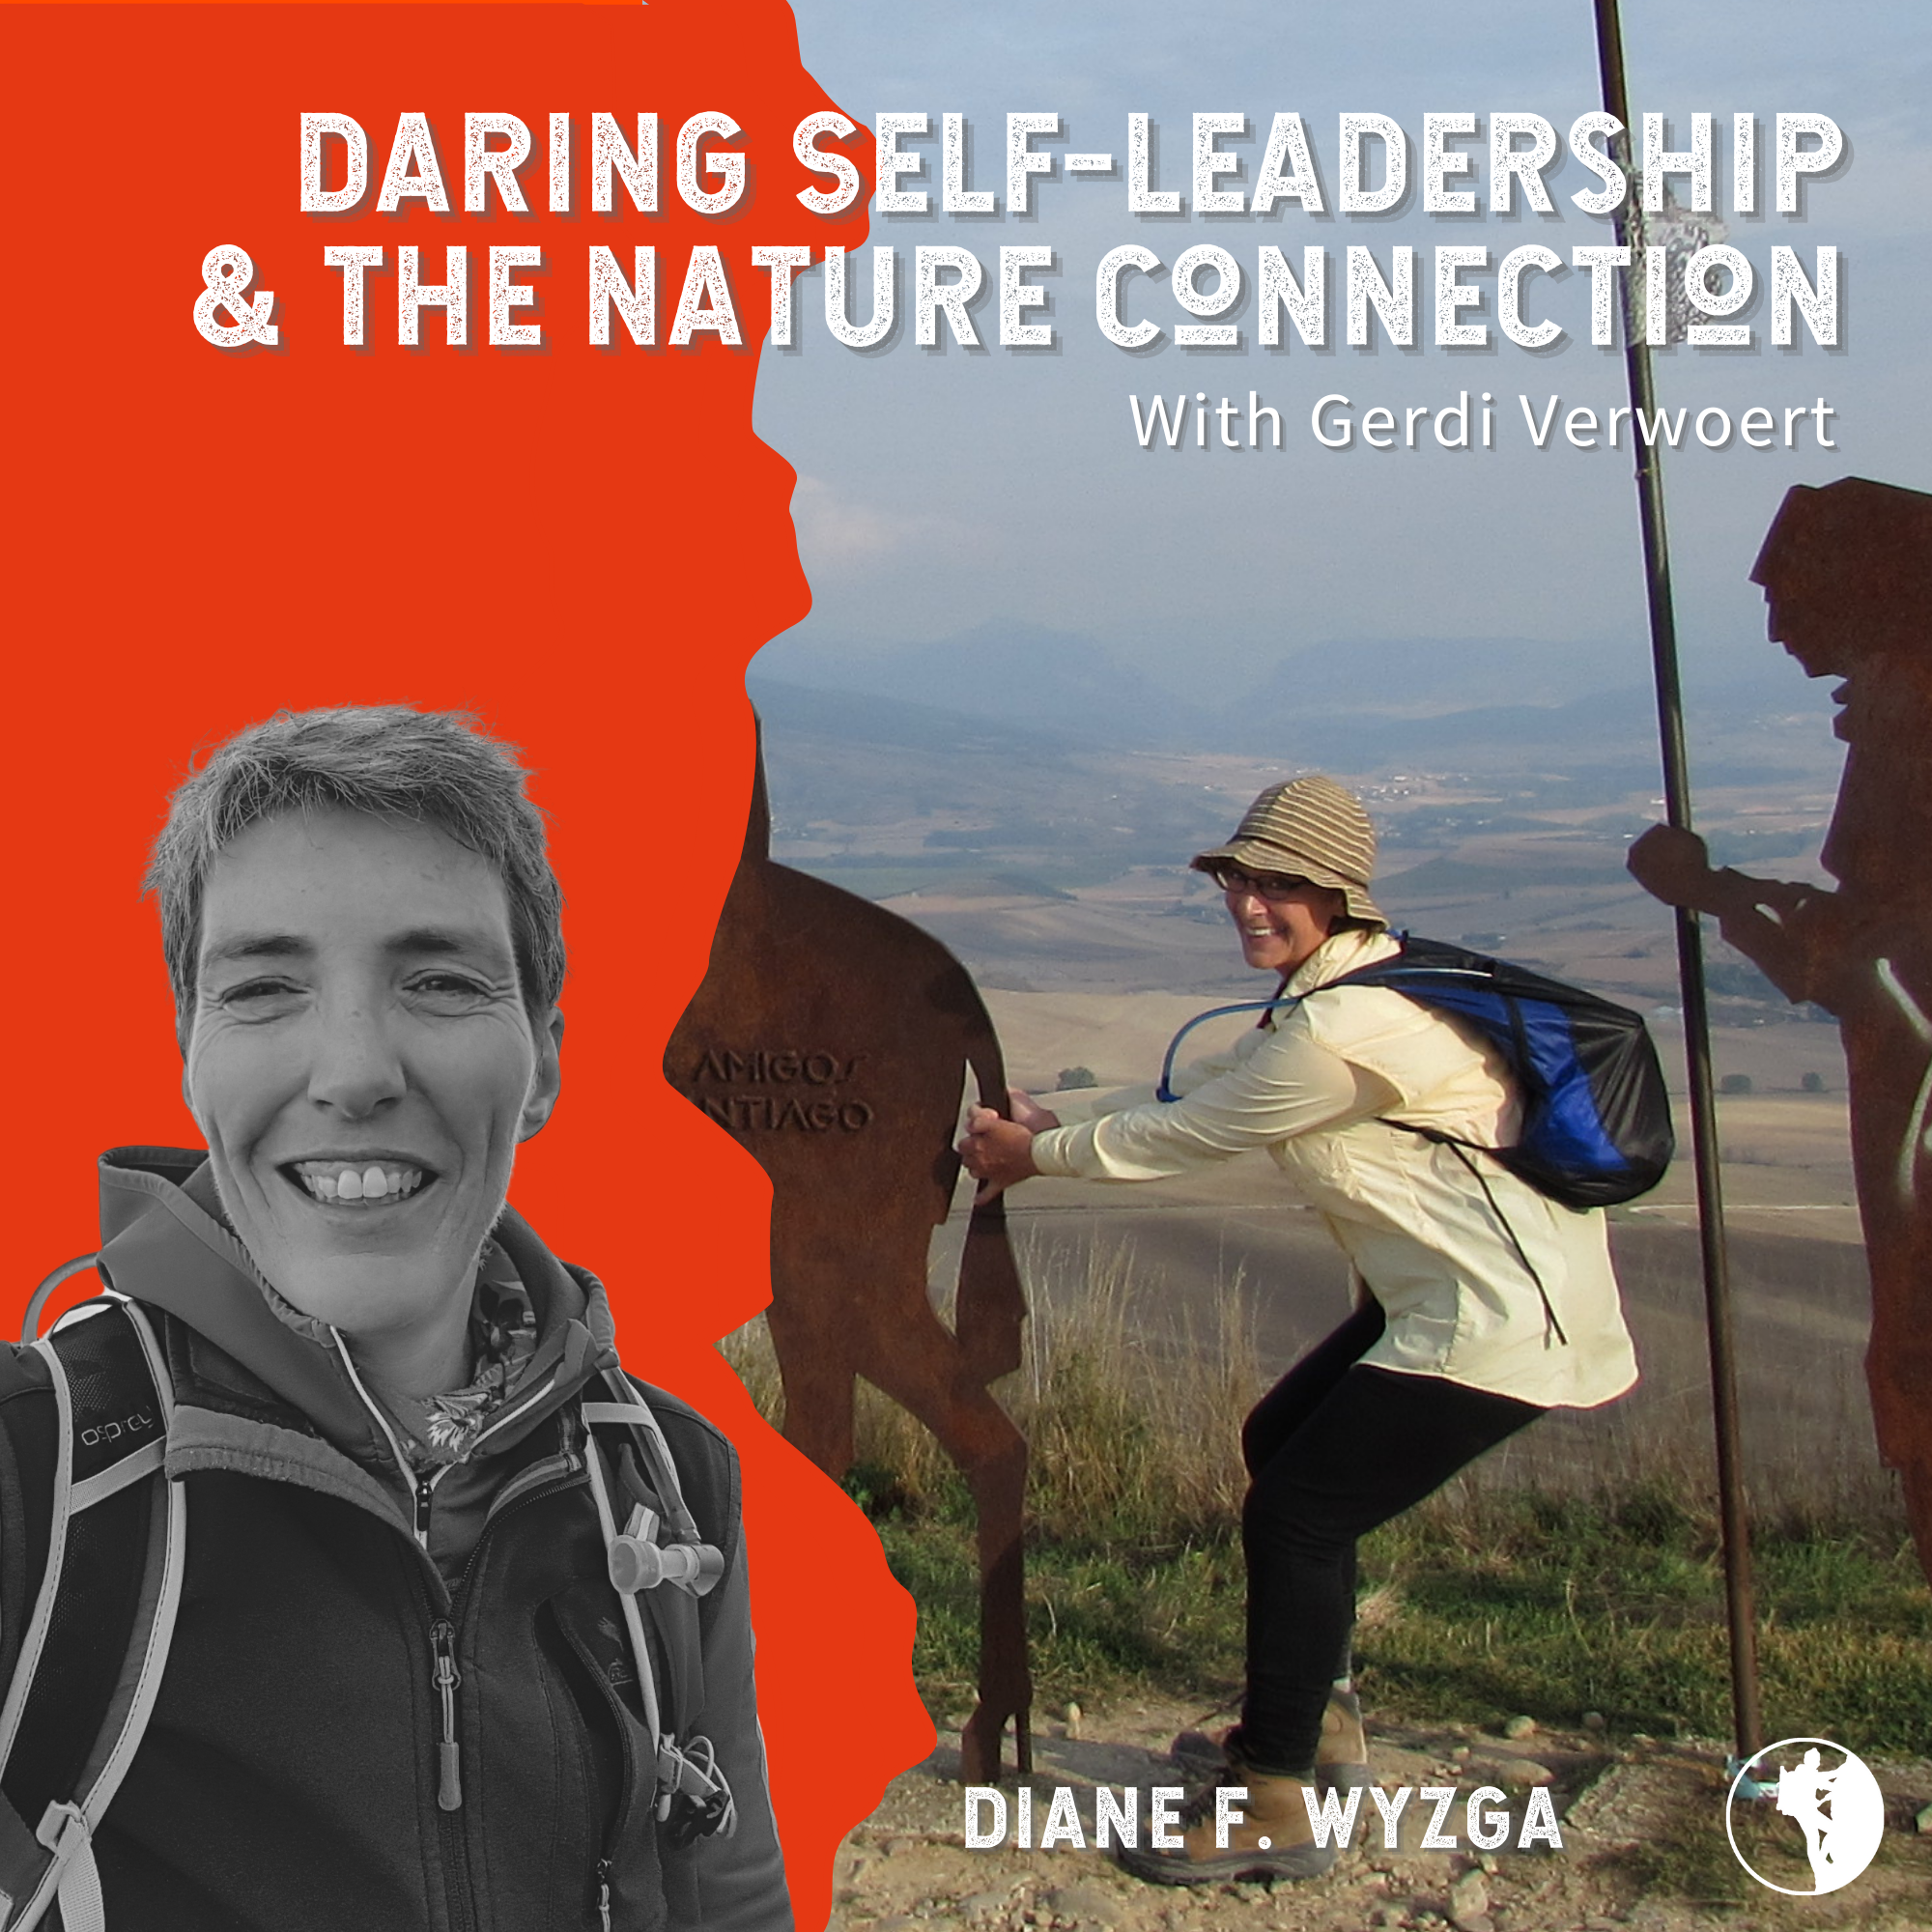 Episode 46: Diane F. Wyzga on self-leadership and storytelling